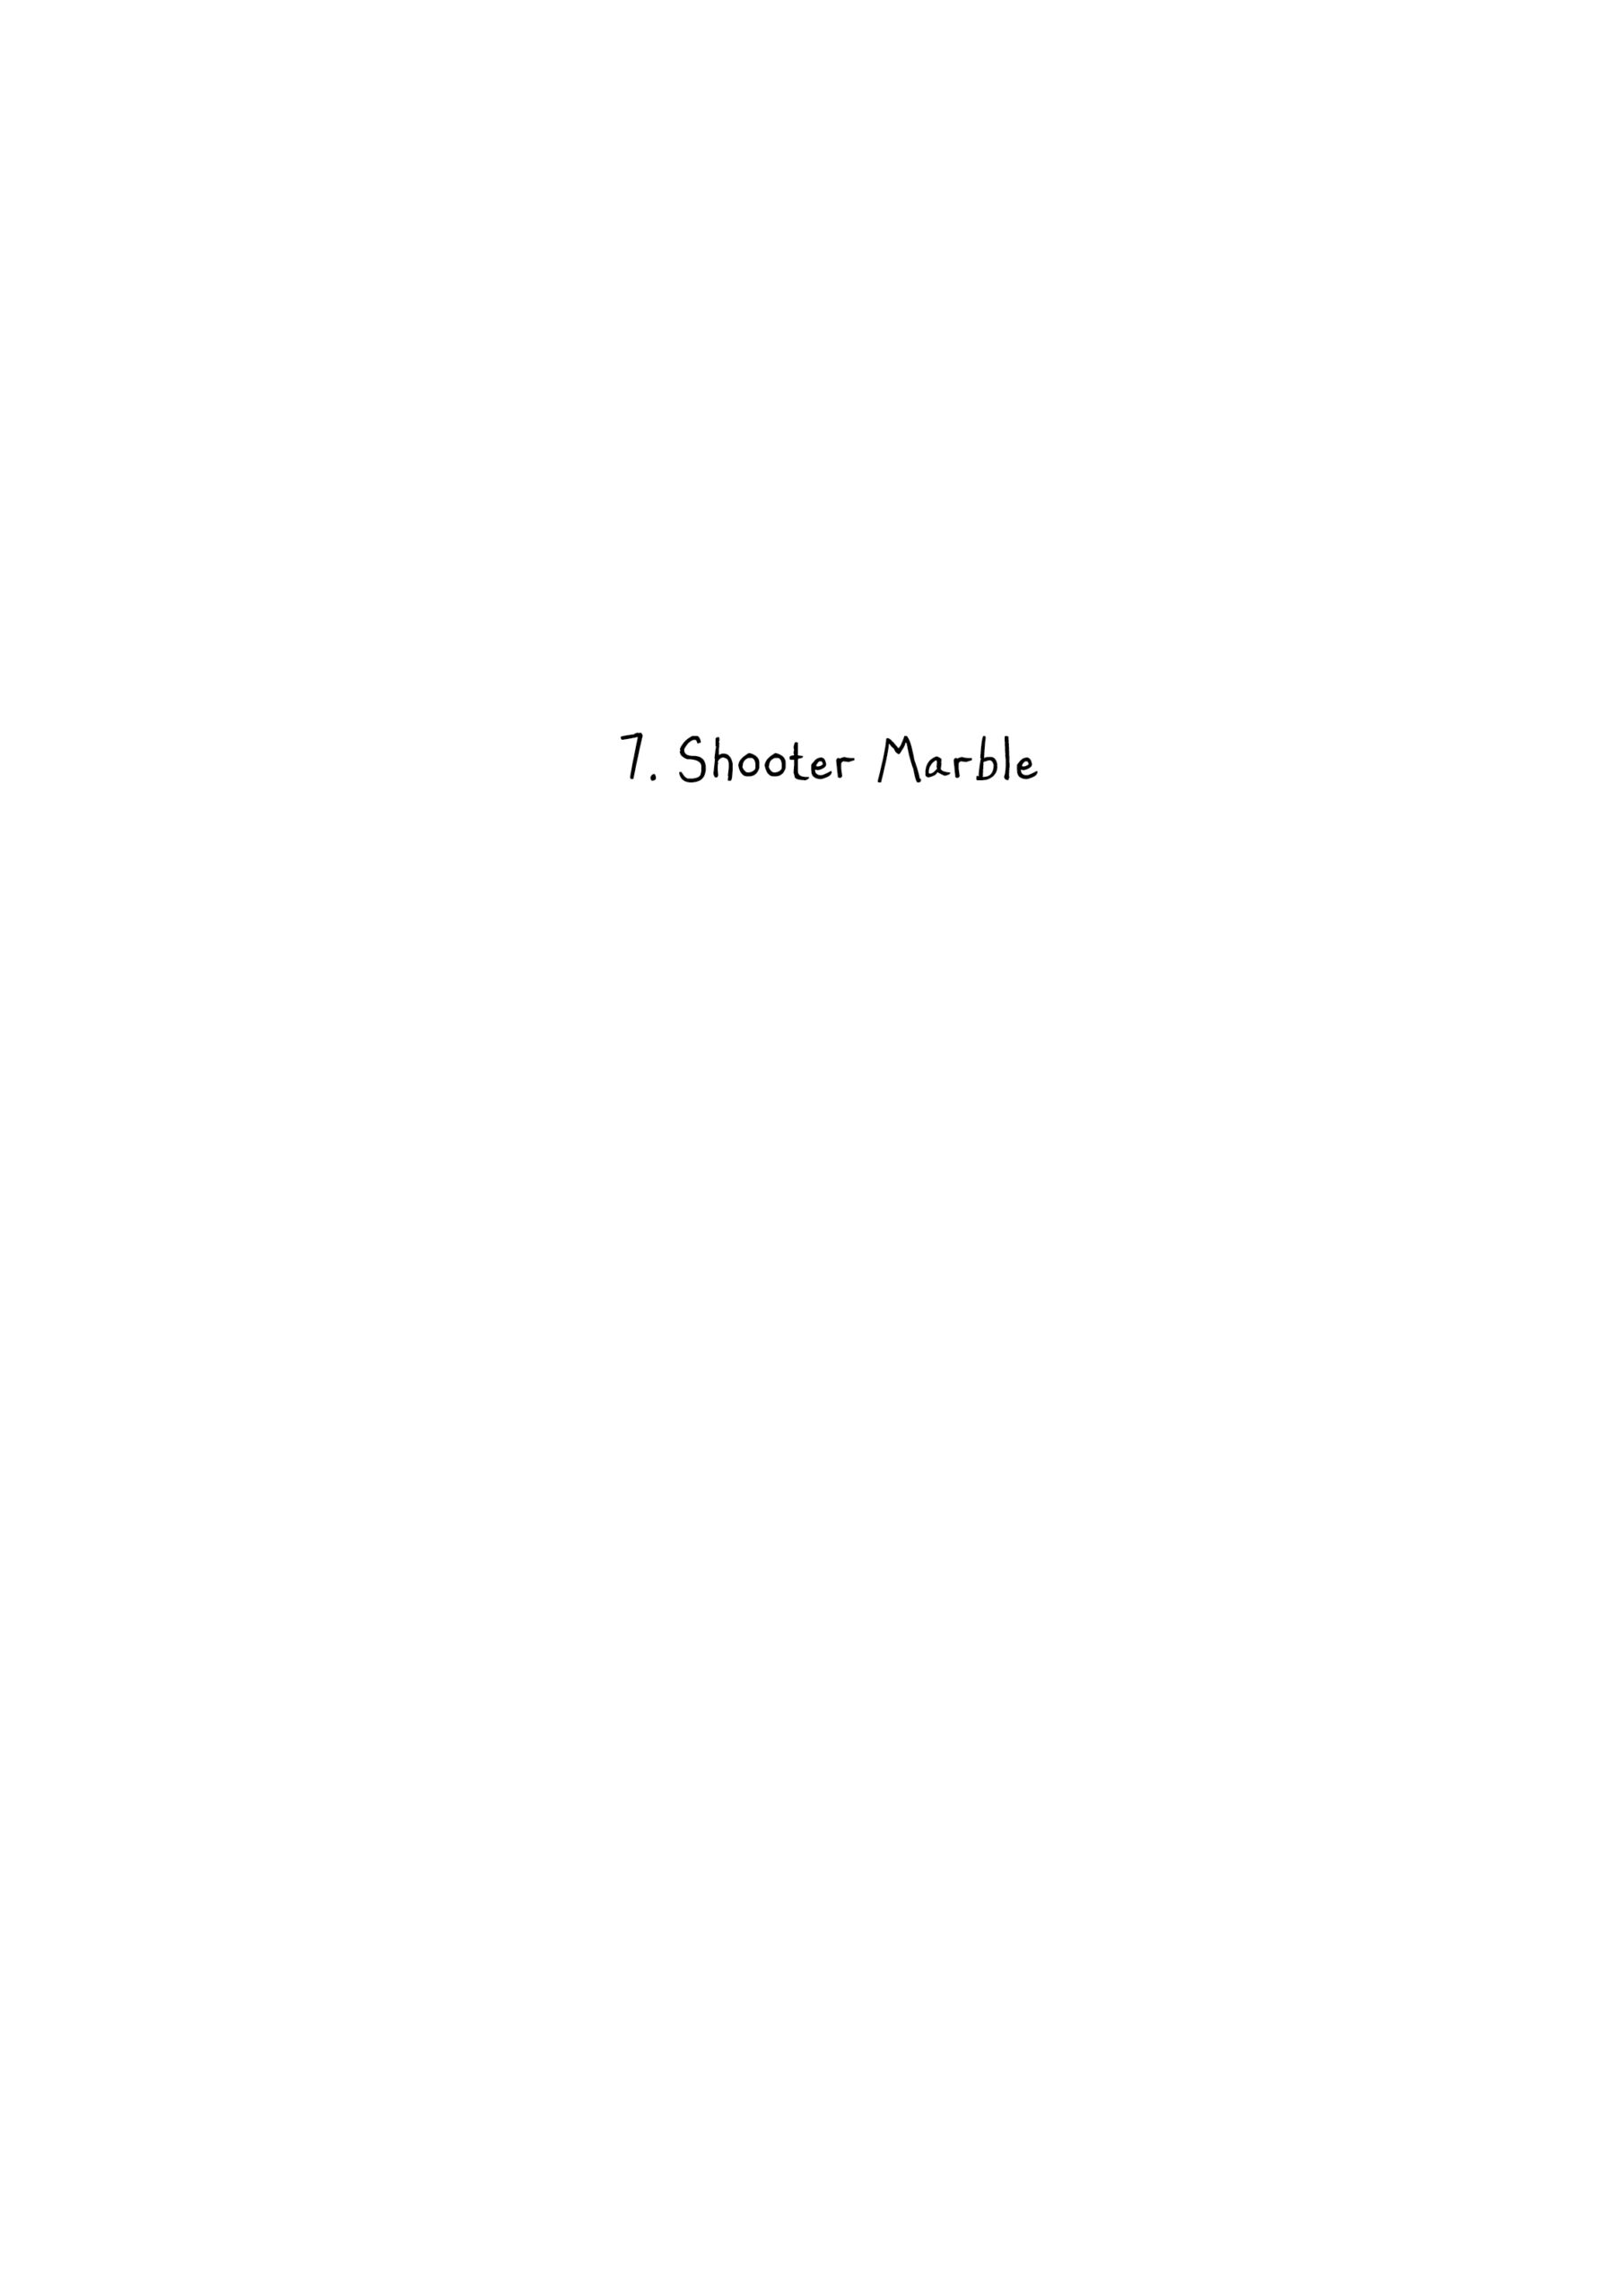 Title page: â€œ7. Shooter Marbleâ€